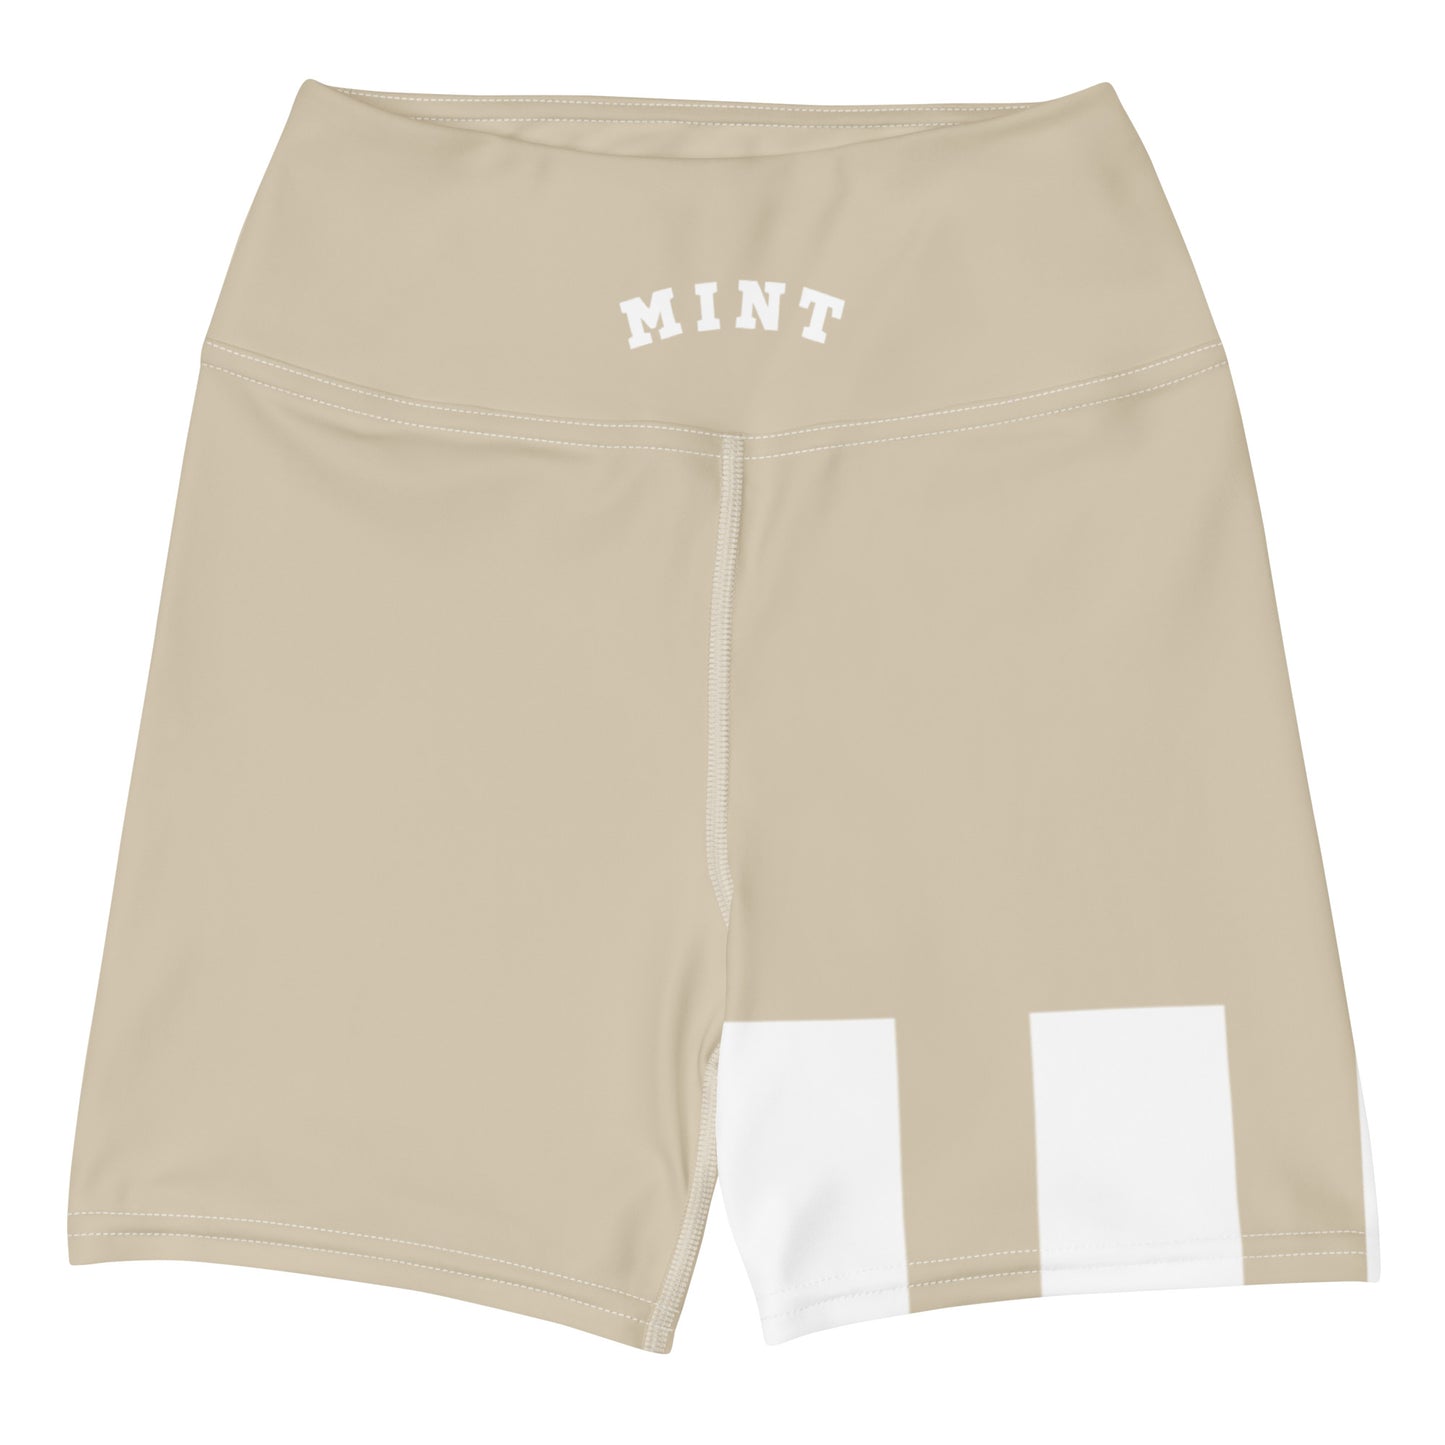 Mint Soft-blend Athletic Yoga Shorts